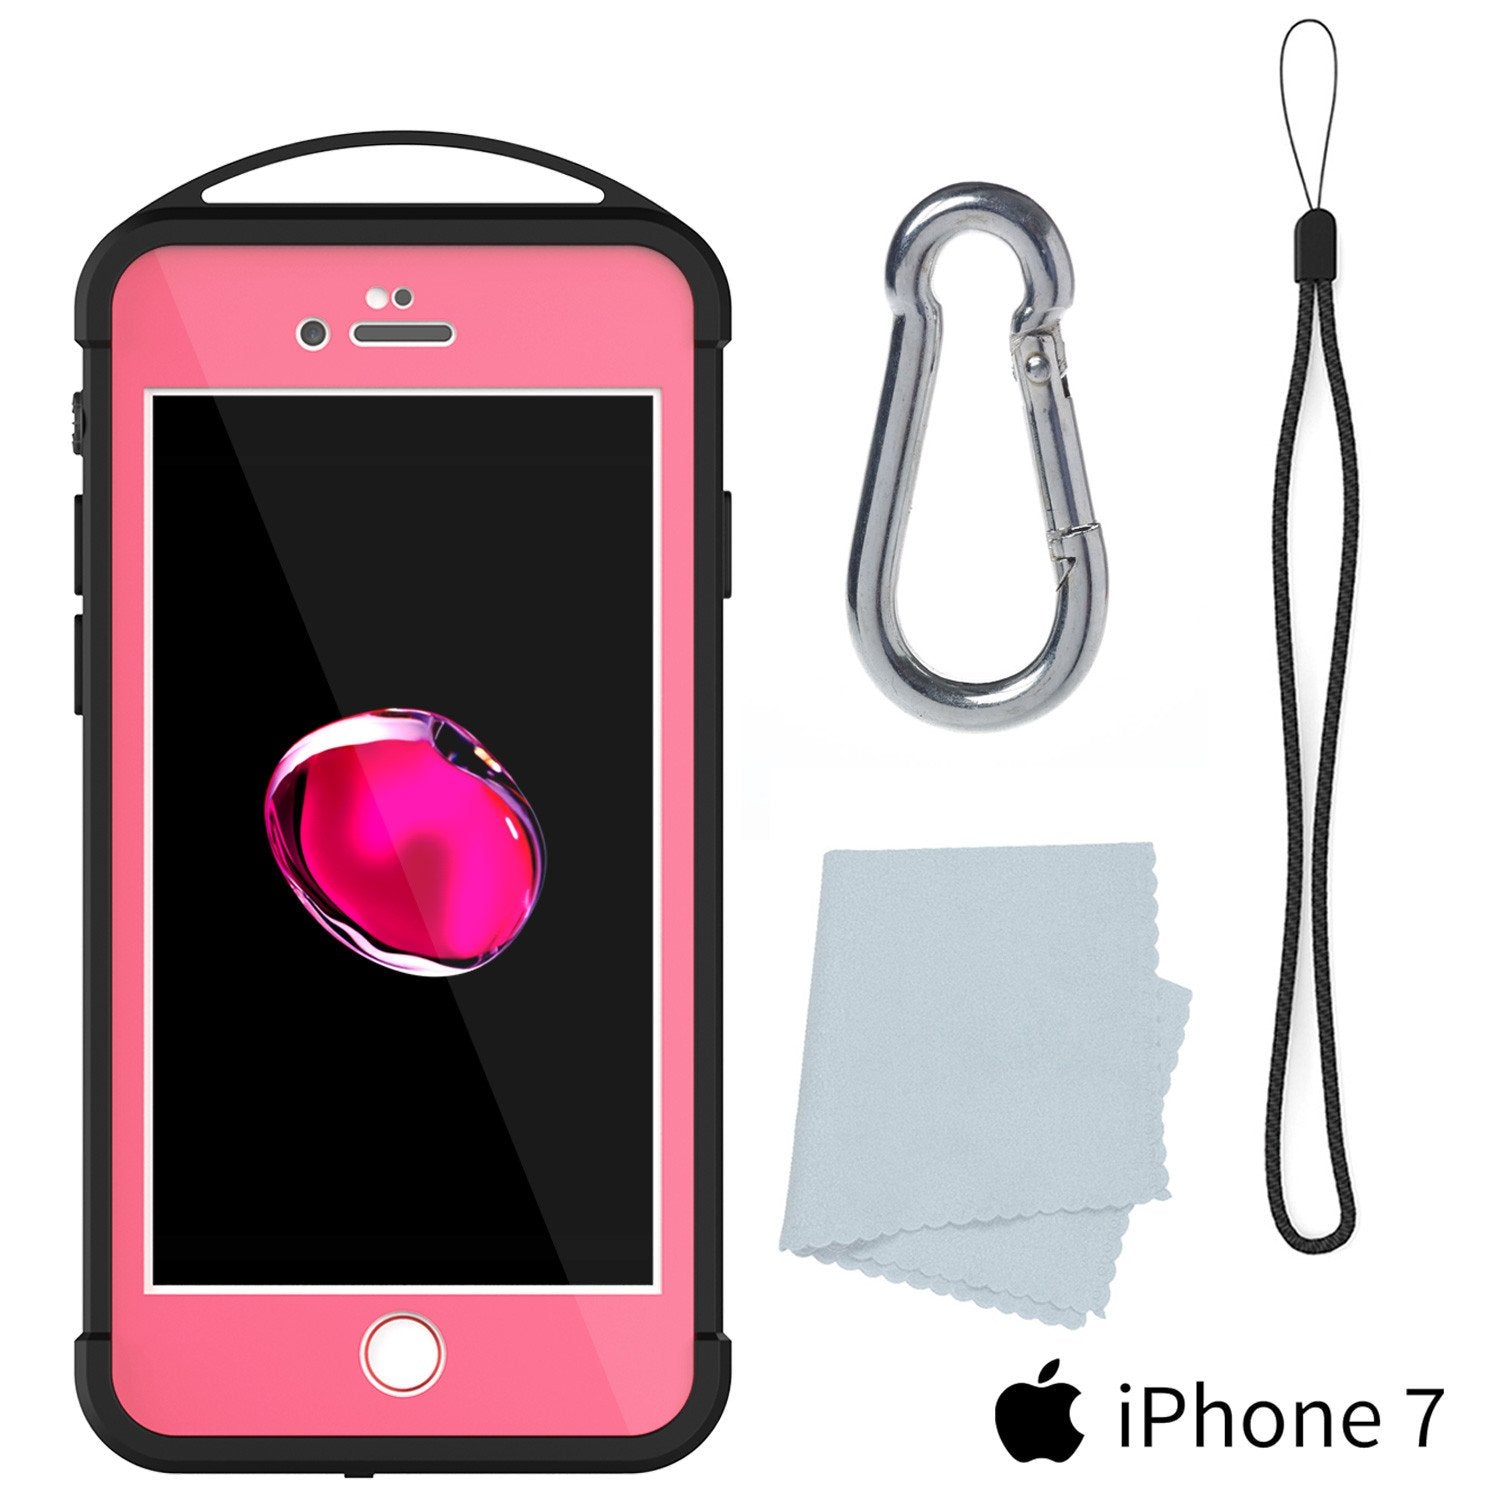 iPhone 7 Waterproof Case, Punkcase ALPINE Series, Pink | Heavy Duty Armor Cover